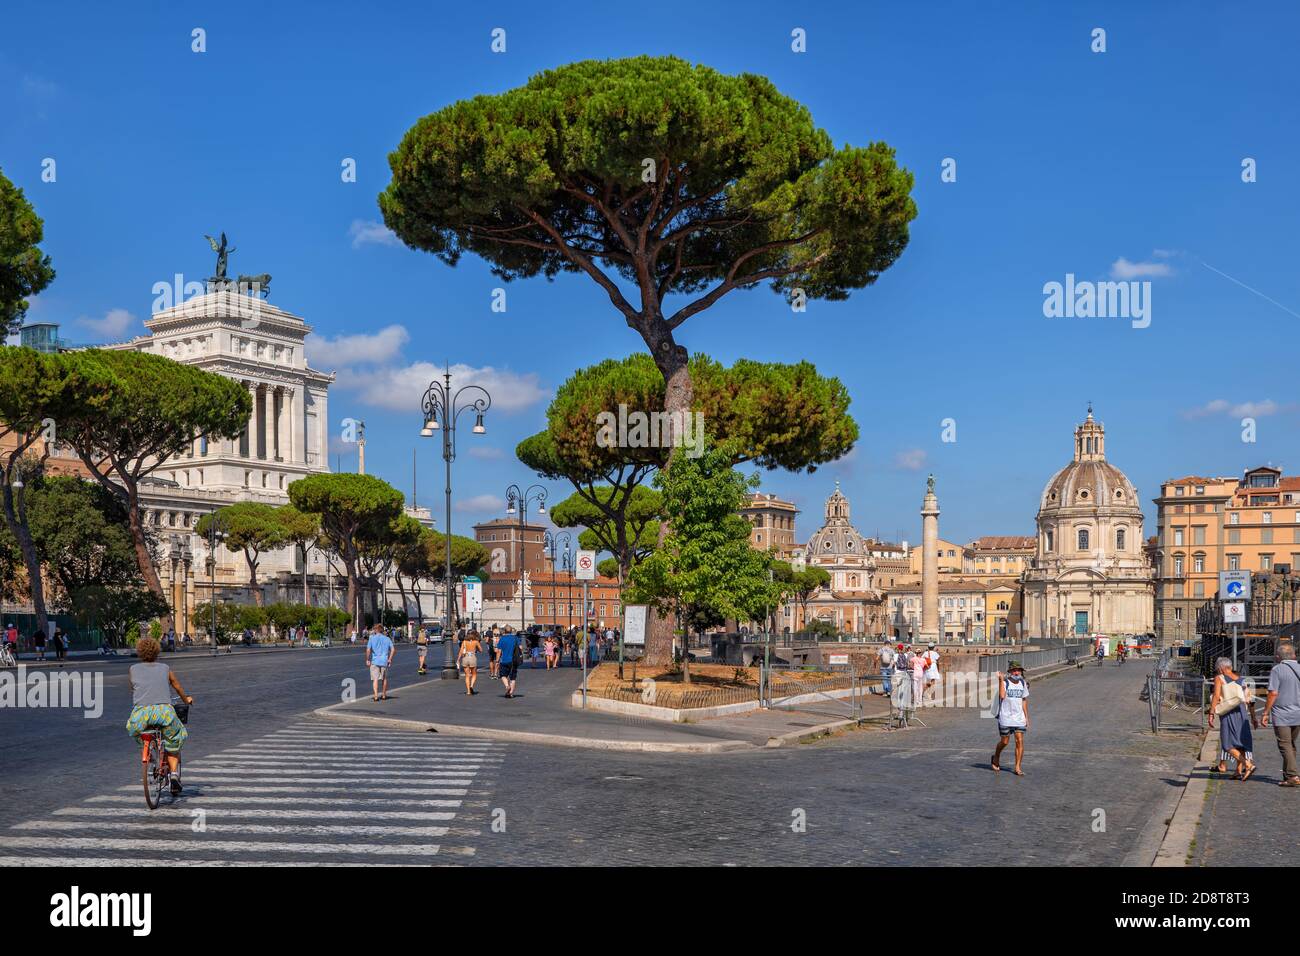 City of Rome in Italy, Via dei Fori Imperiali and Via Alessandrina street in historic city center Stock Photo